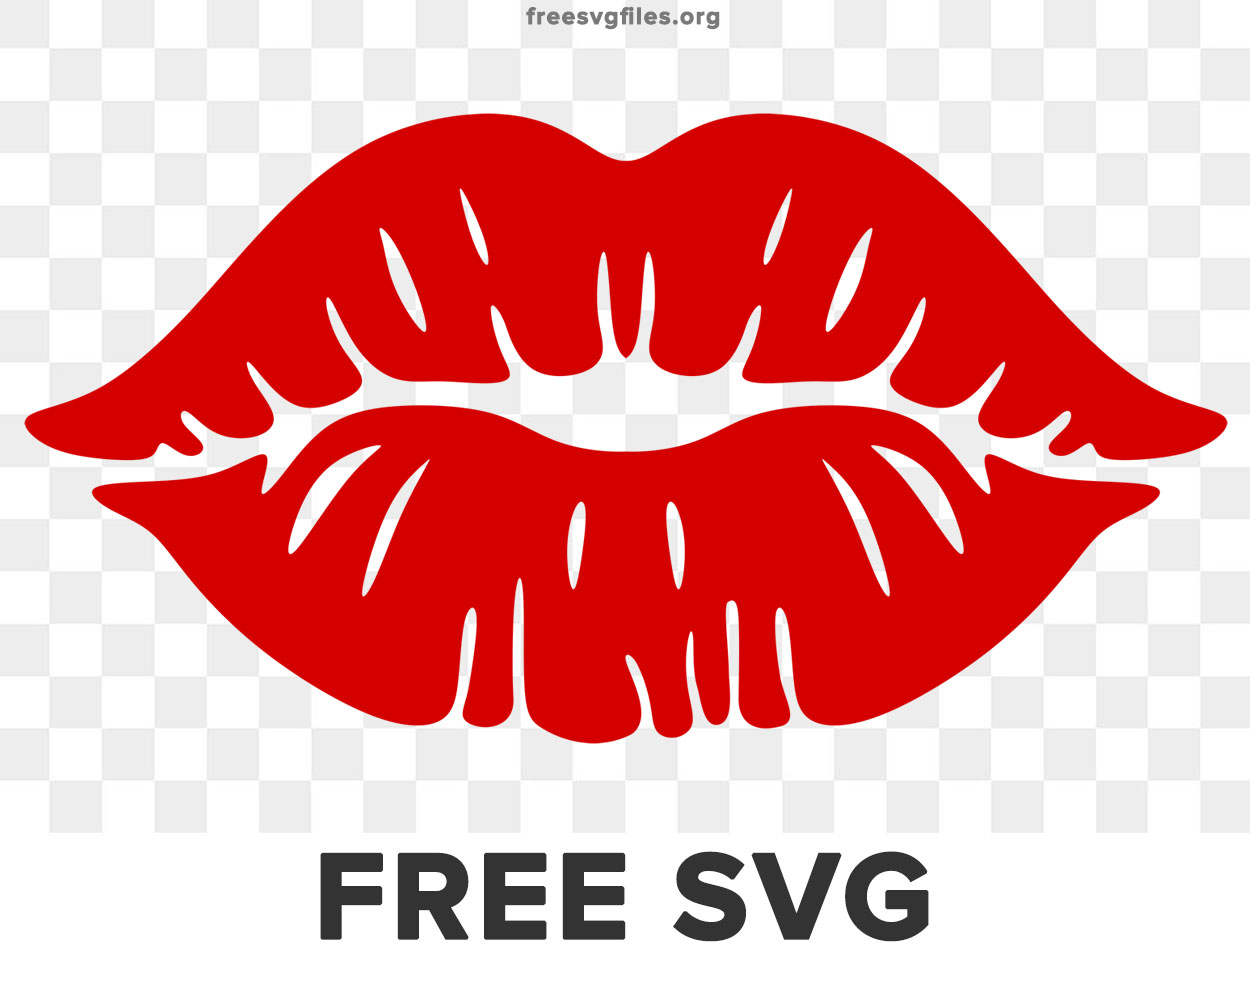 Lips SVG PNG Free Cut Files Free SVG Download | vlr.eng.br